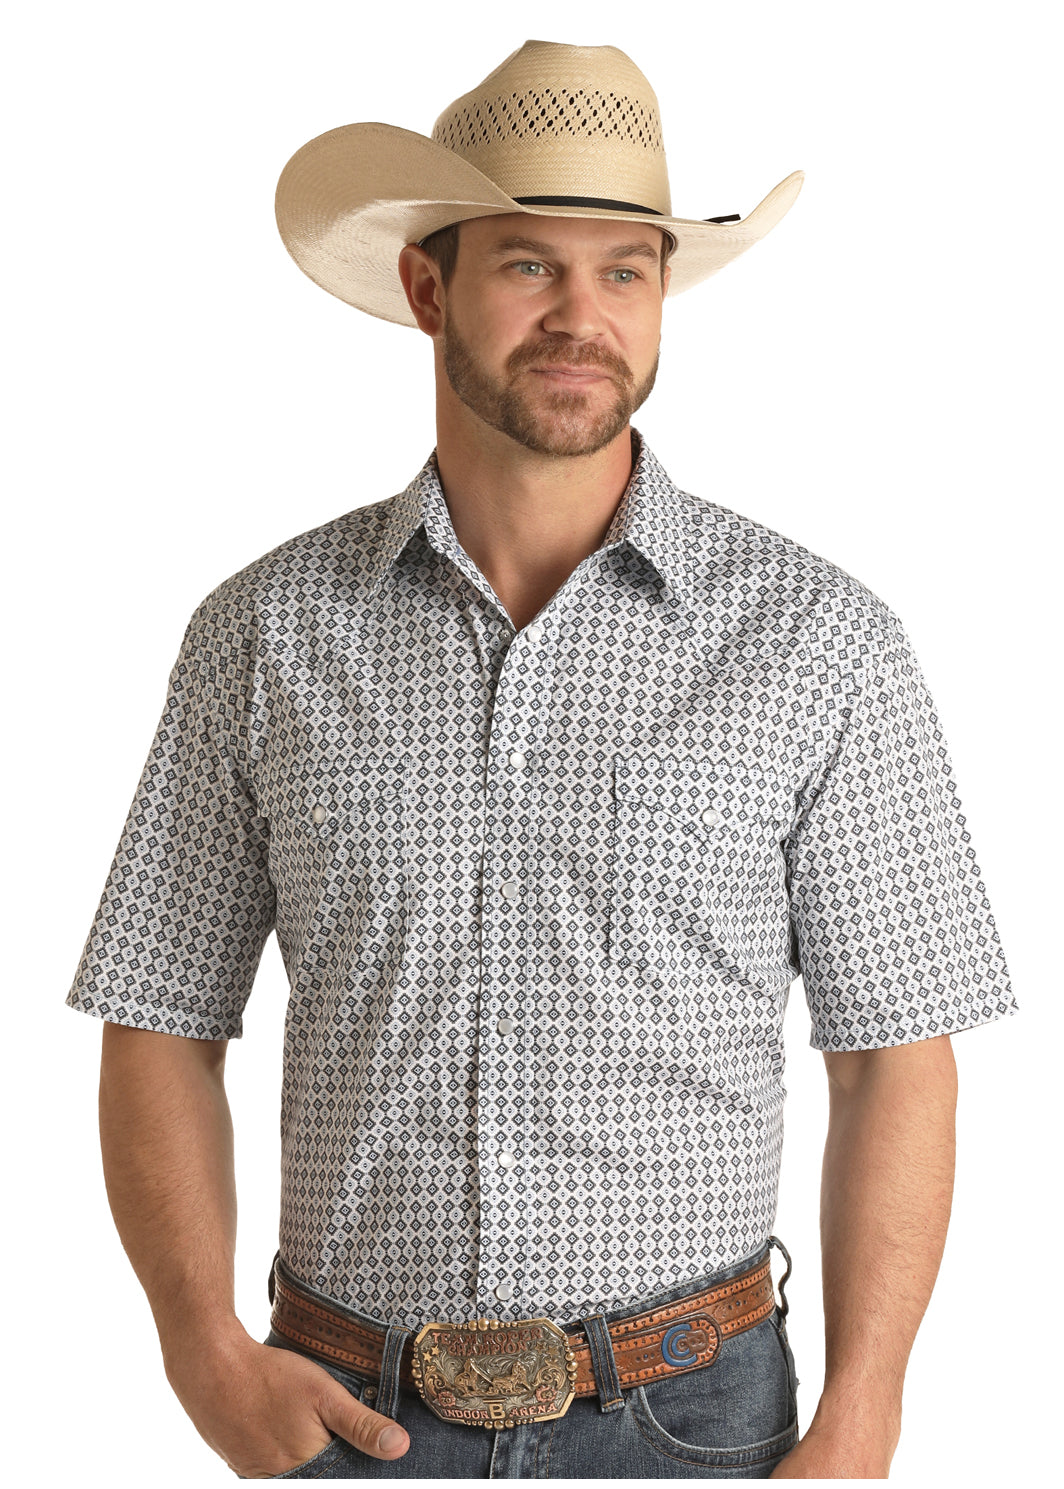 Panhandle Men's Rough Stock Aztec Print Short Sleeve Western Shirt